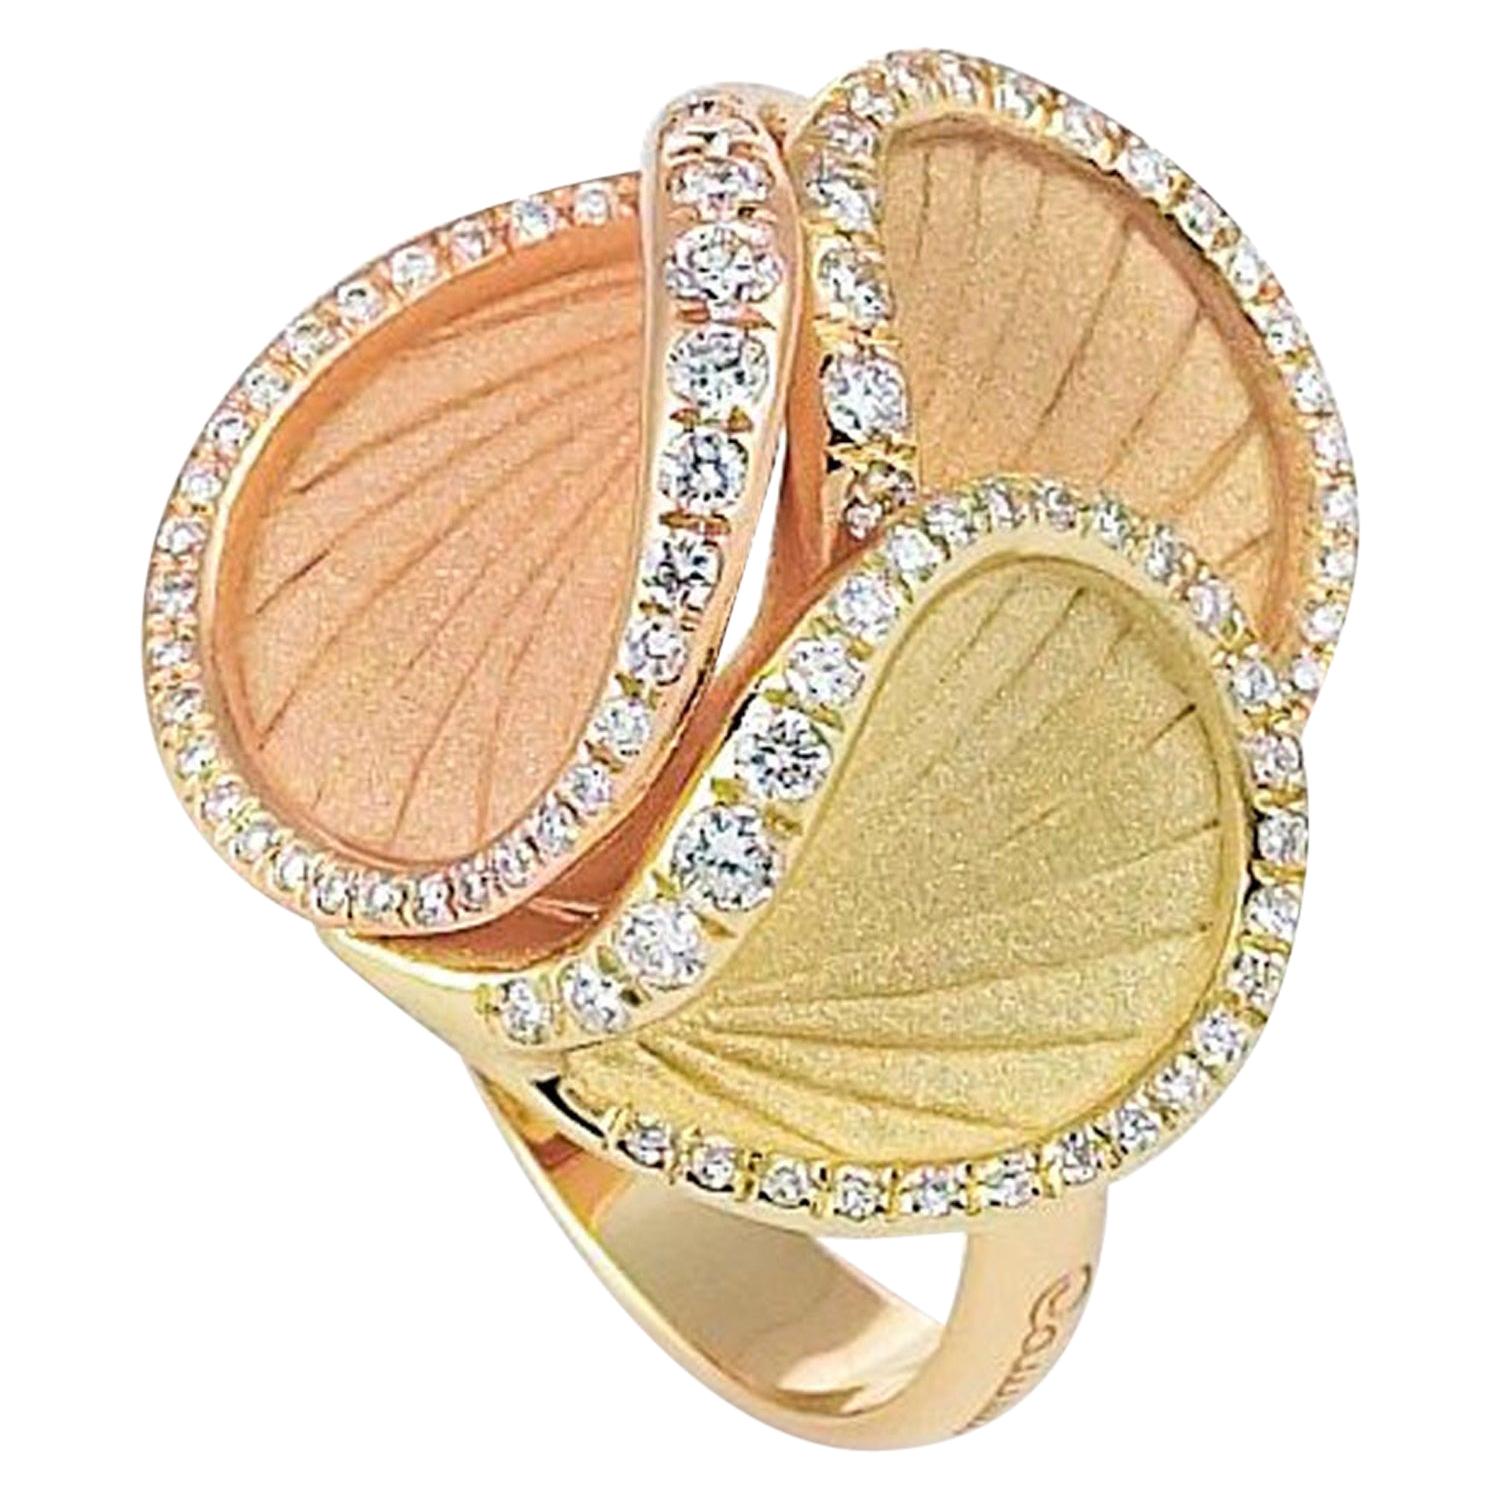 Annamaria Cammilli "Musa" Ring with Diamonds in Three Colors of 18 Karat Gold